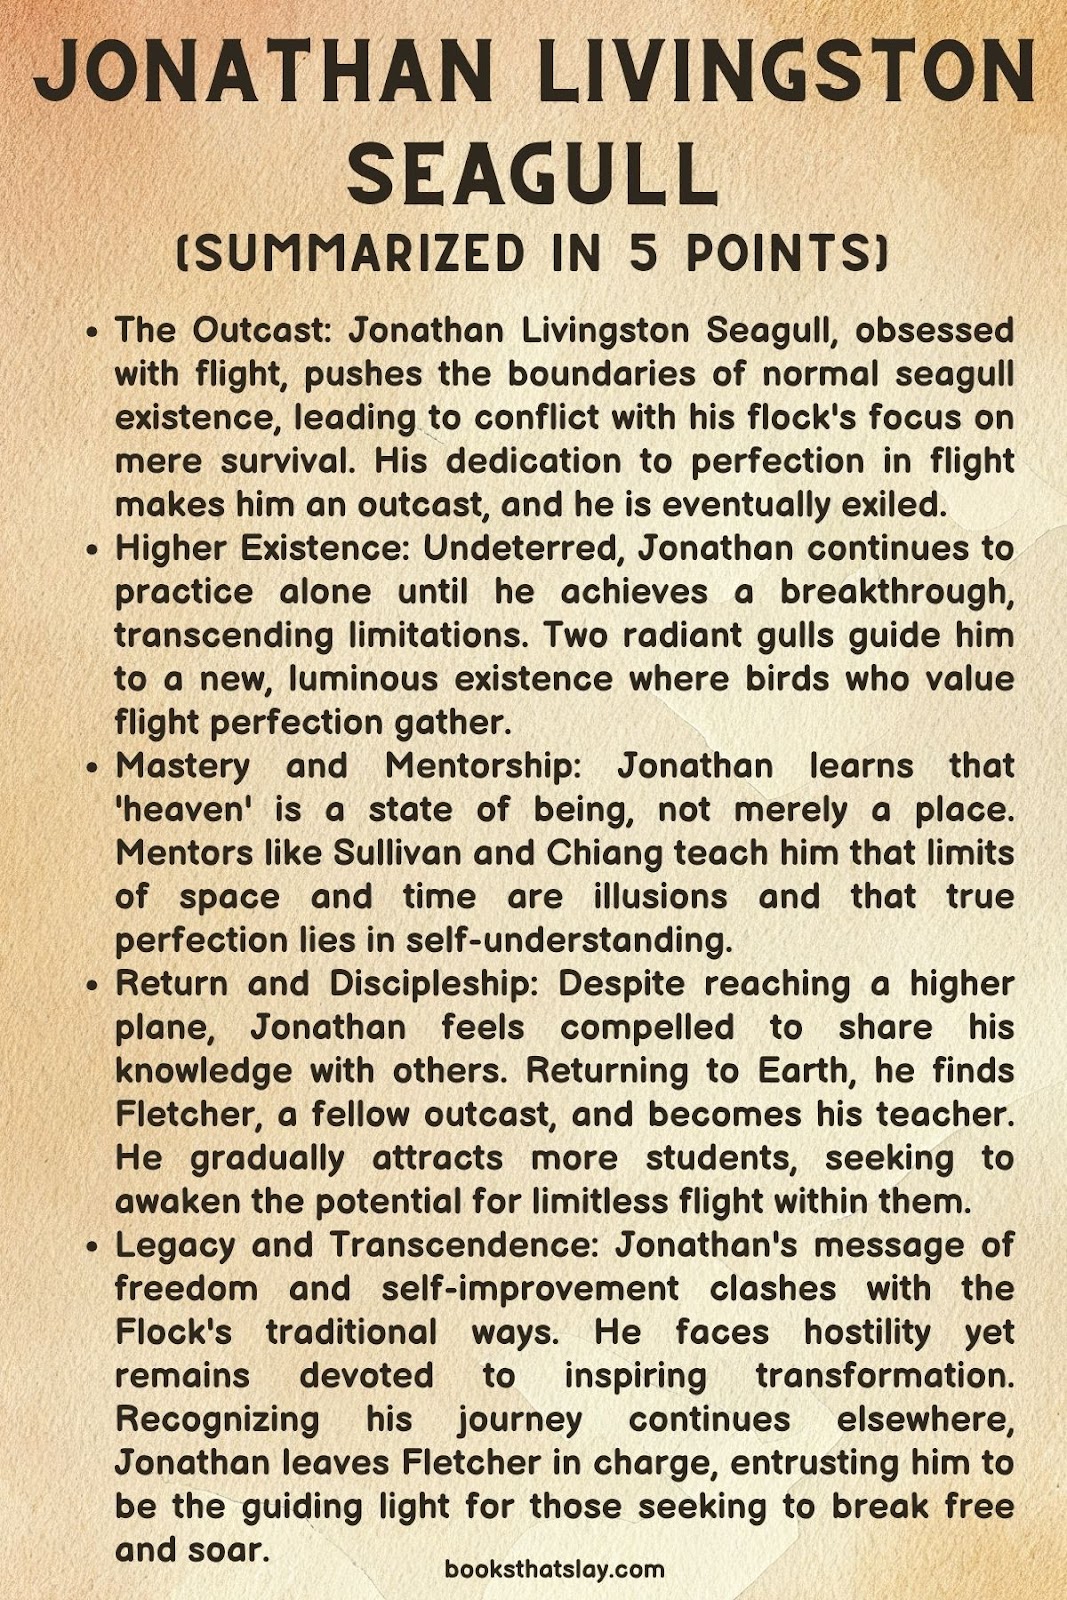 Jonathan Livingston Seagull Summary, Characters and Themes